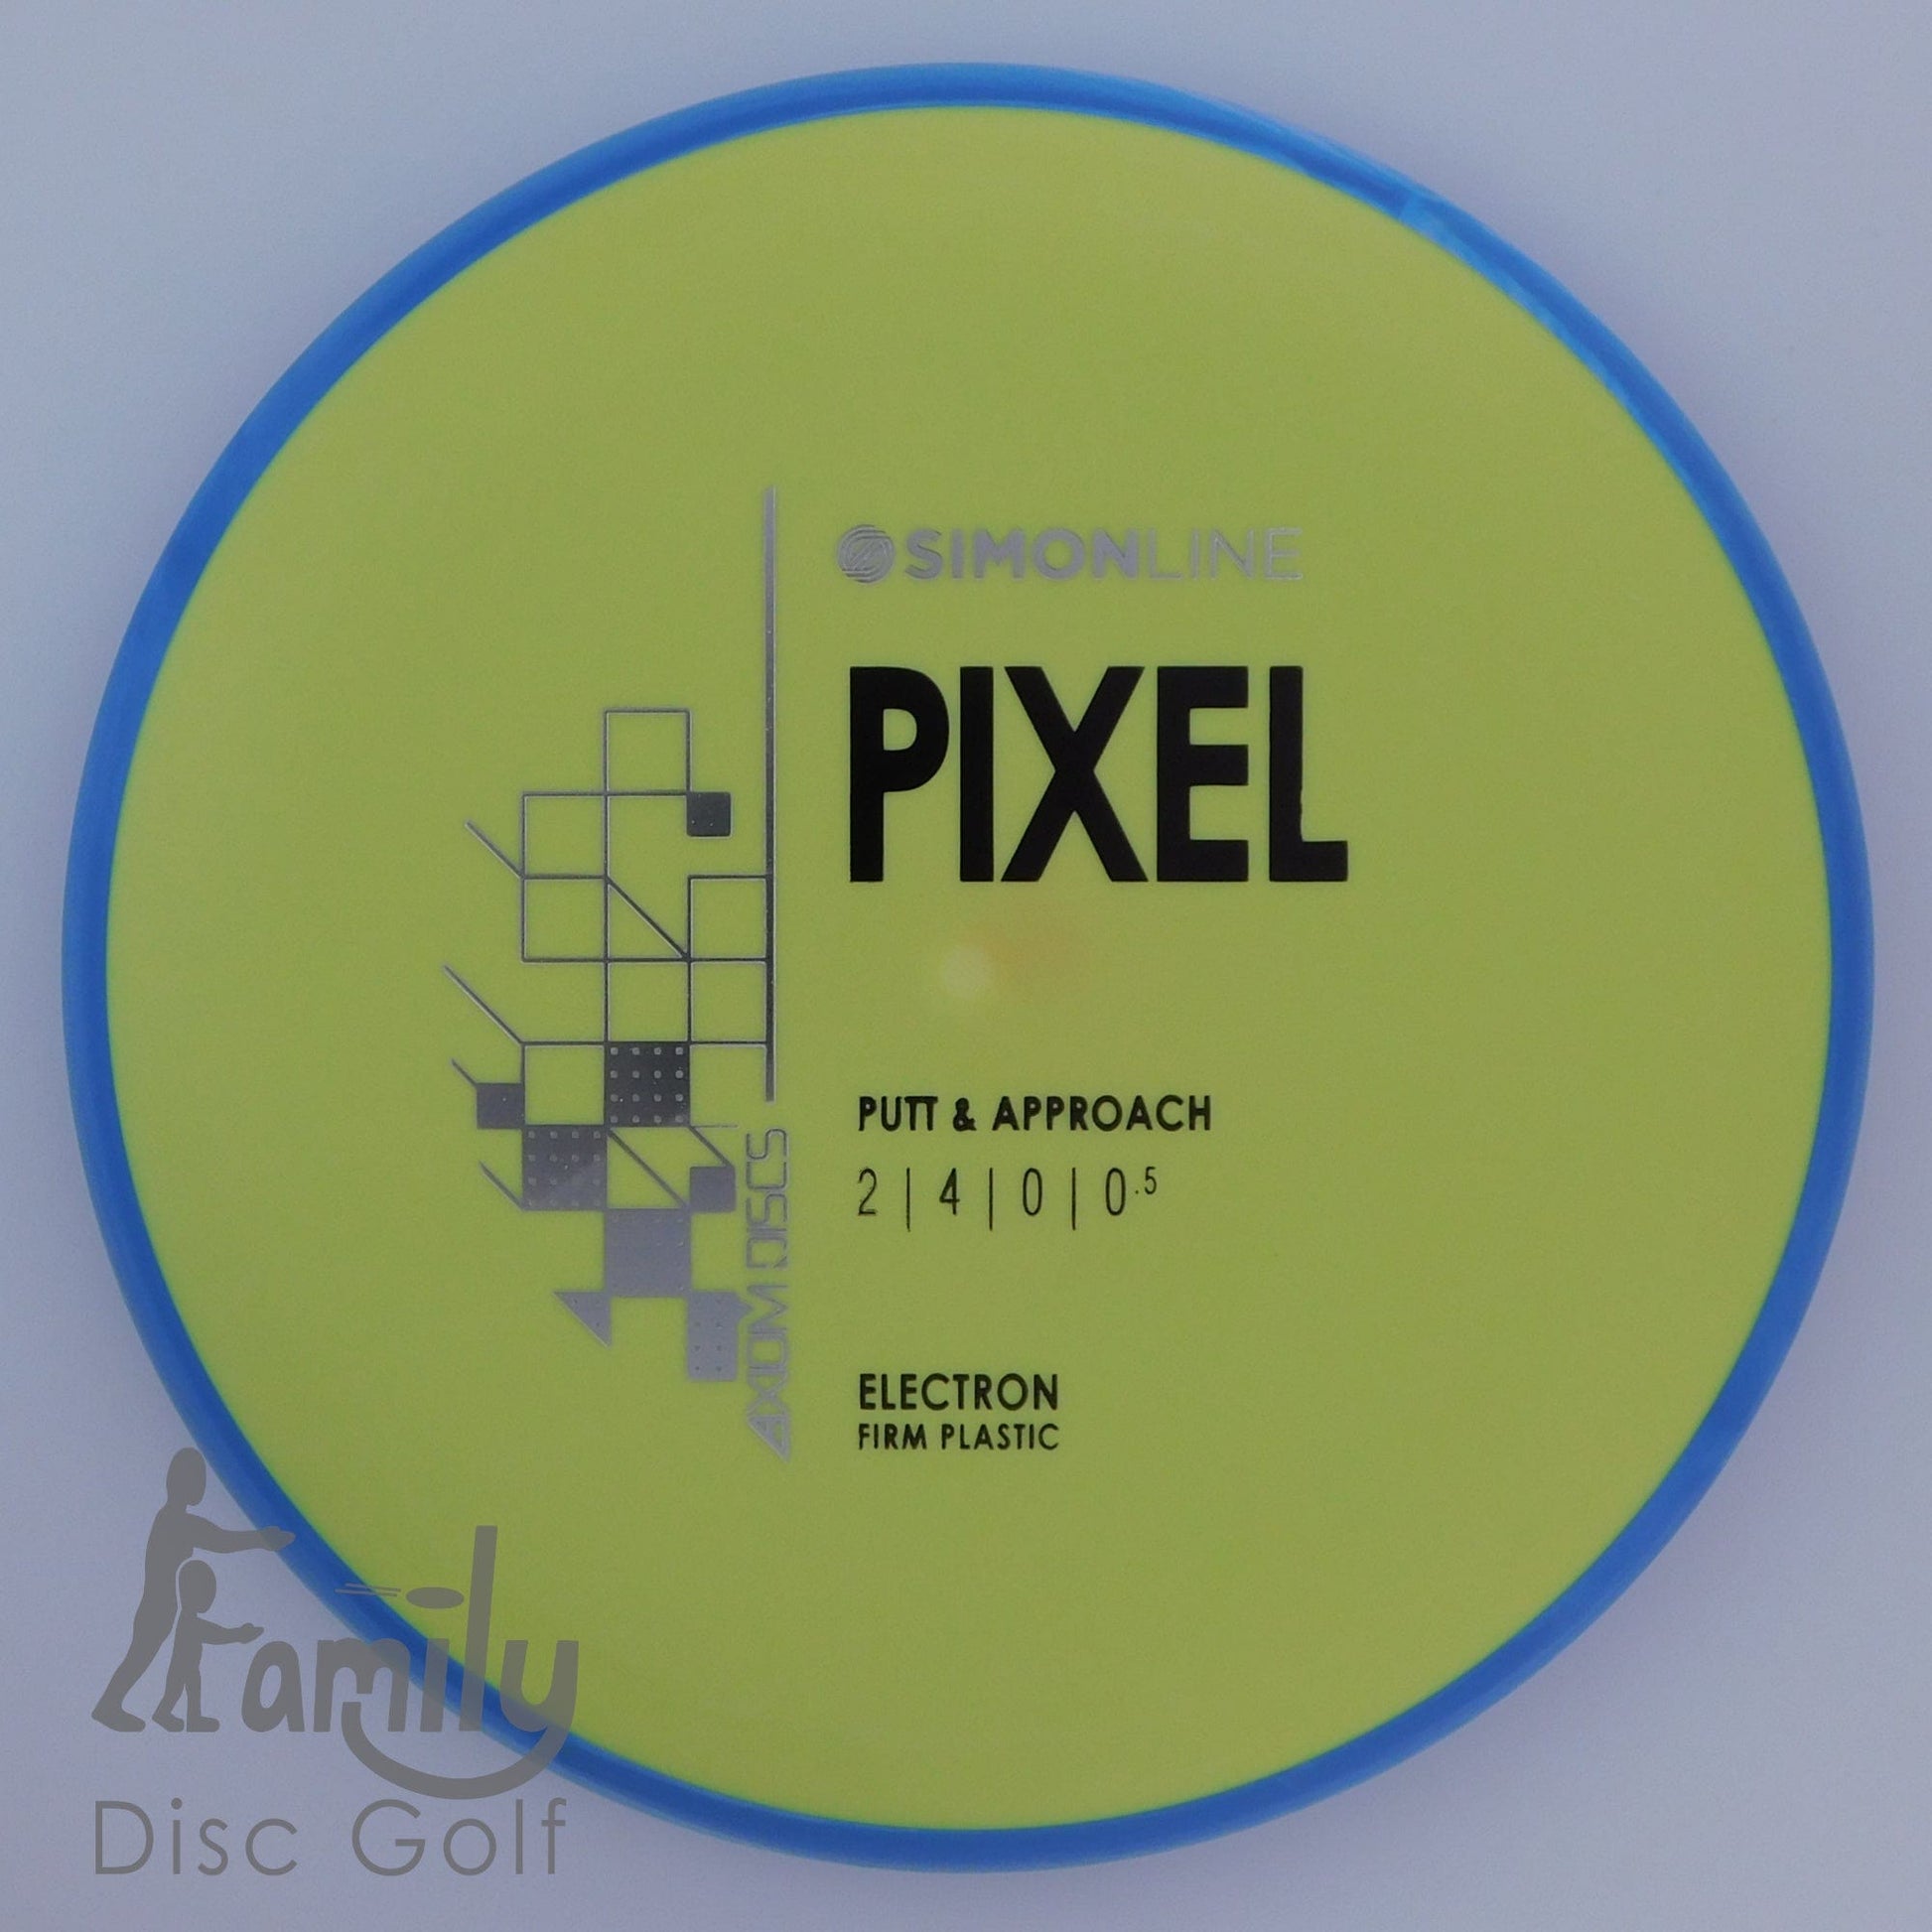 Axiom Pixel - Simon Line - Electron (Firm) 2│4│0│0.5 176g - Yellow+Blue - Axiom Pixel - Electron Firm - 101886